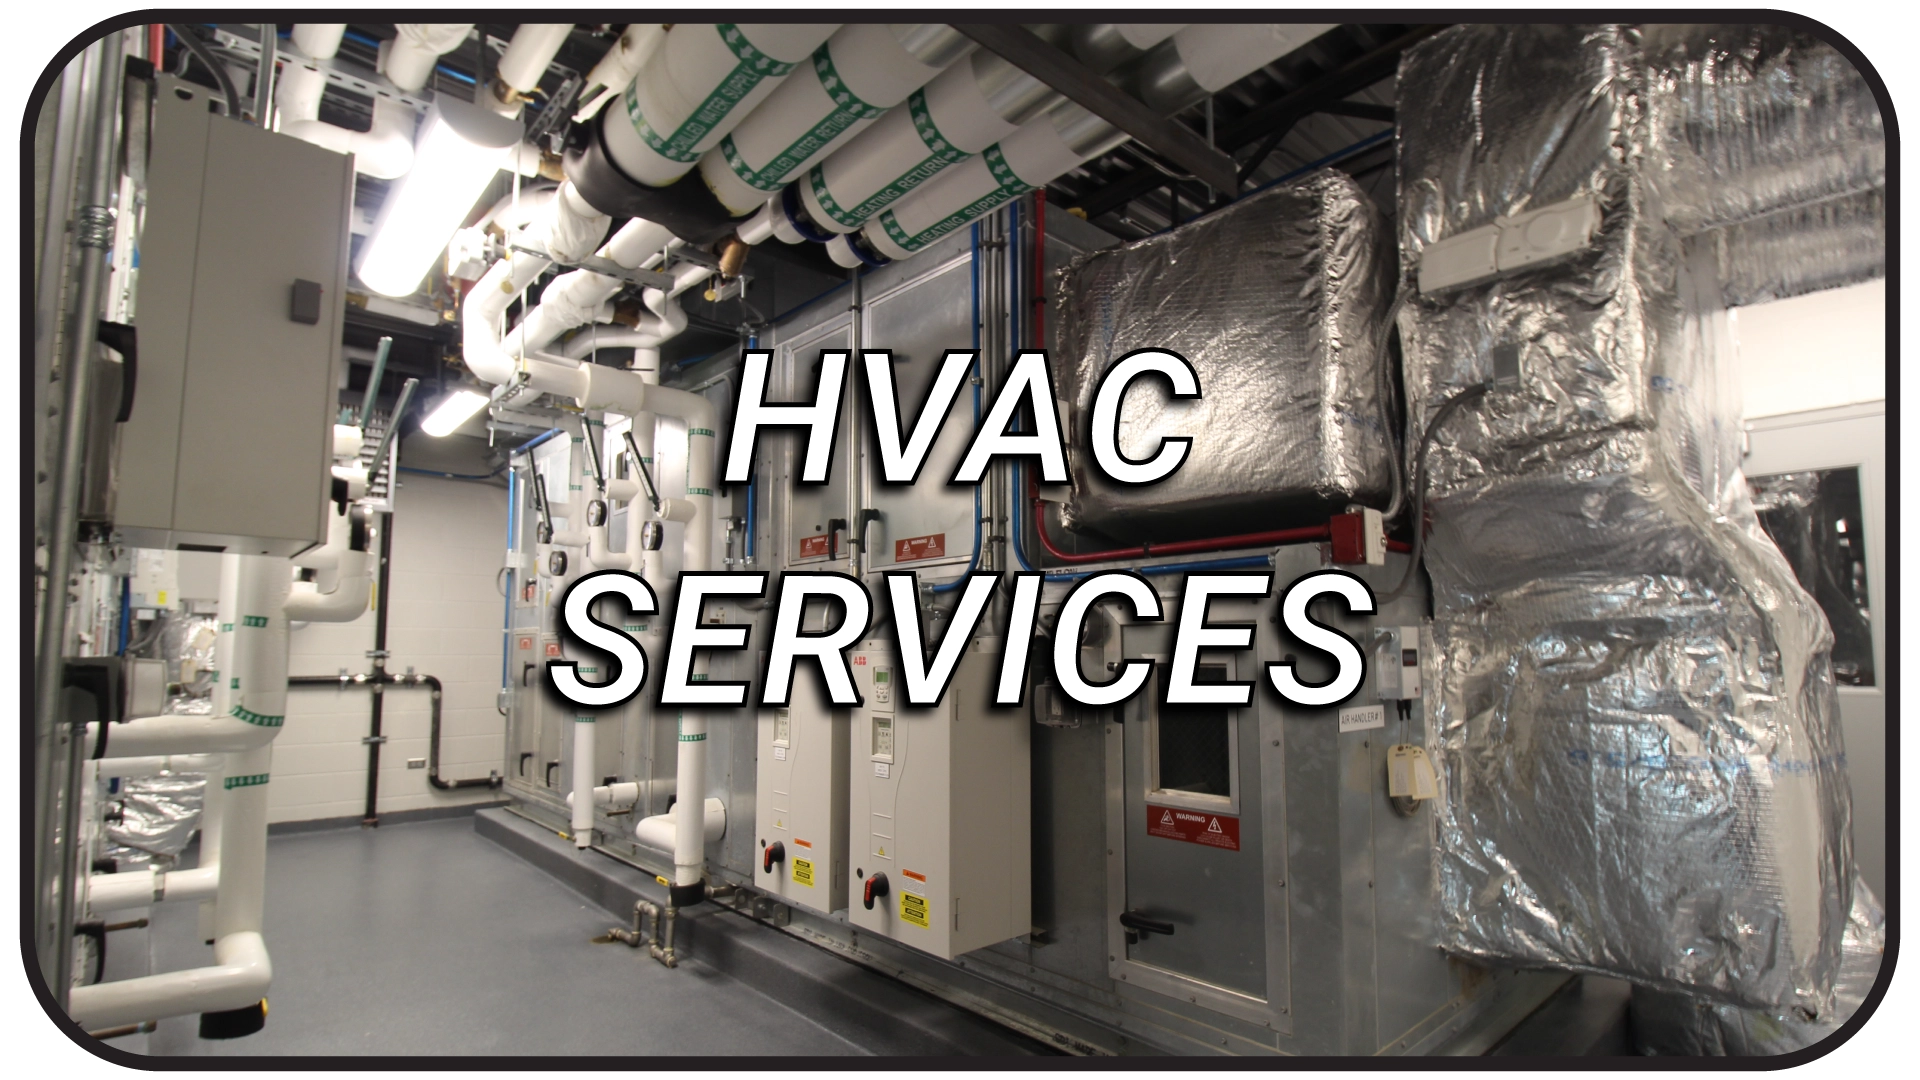 HVAC services